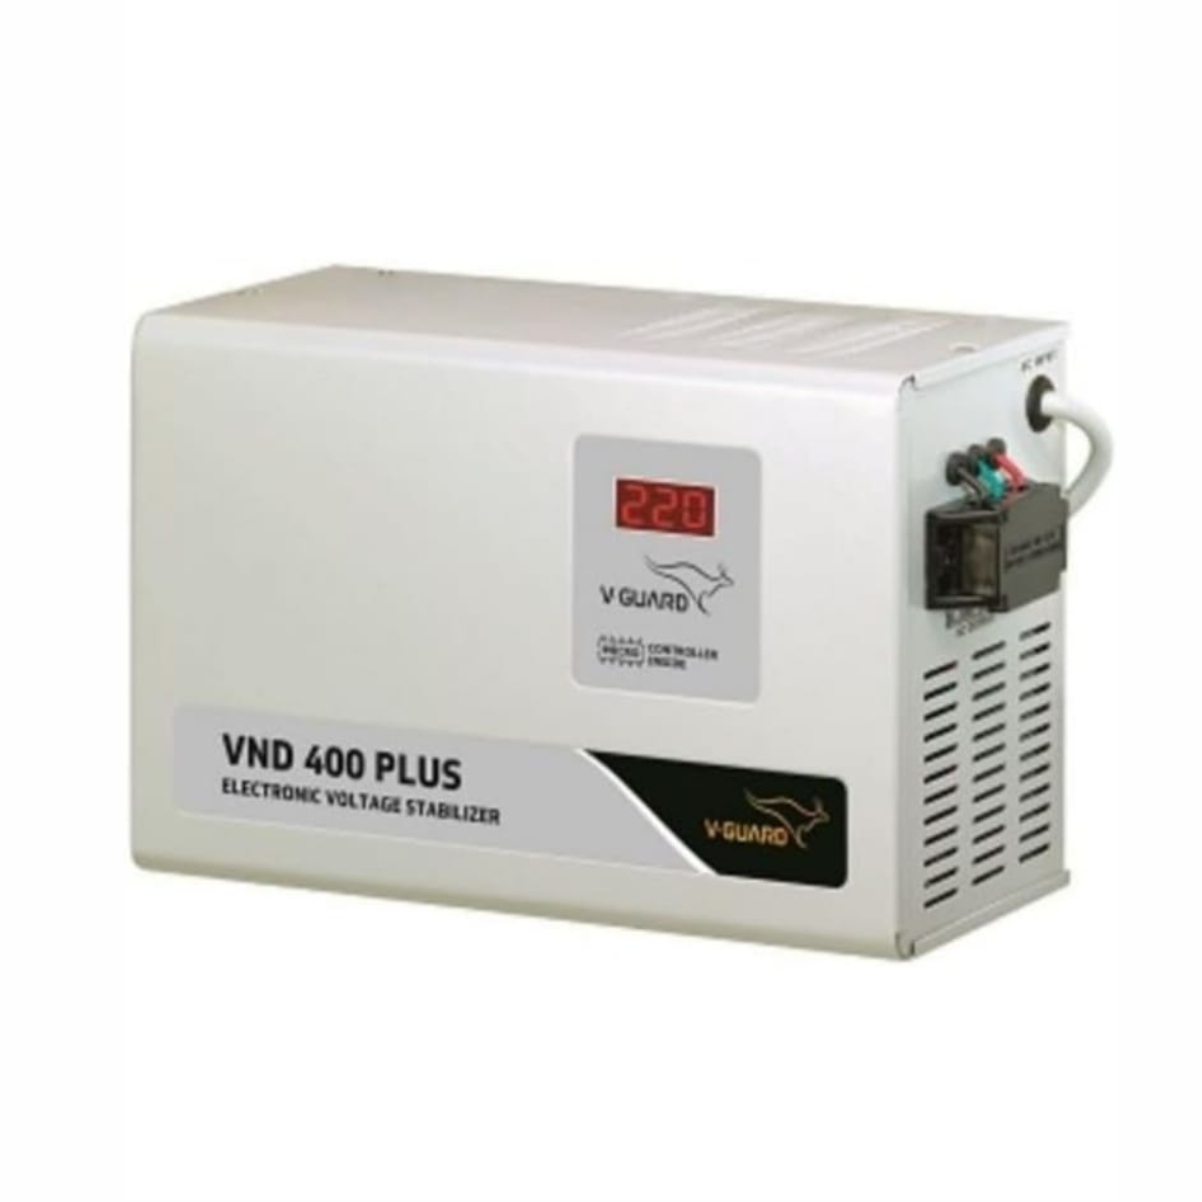 V-Guard VND 400 PLUS, Electronic voltage stabilizer